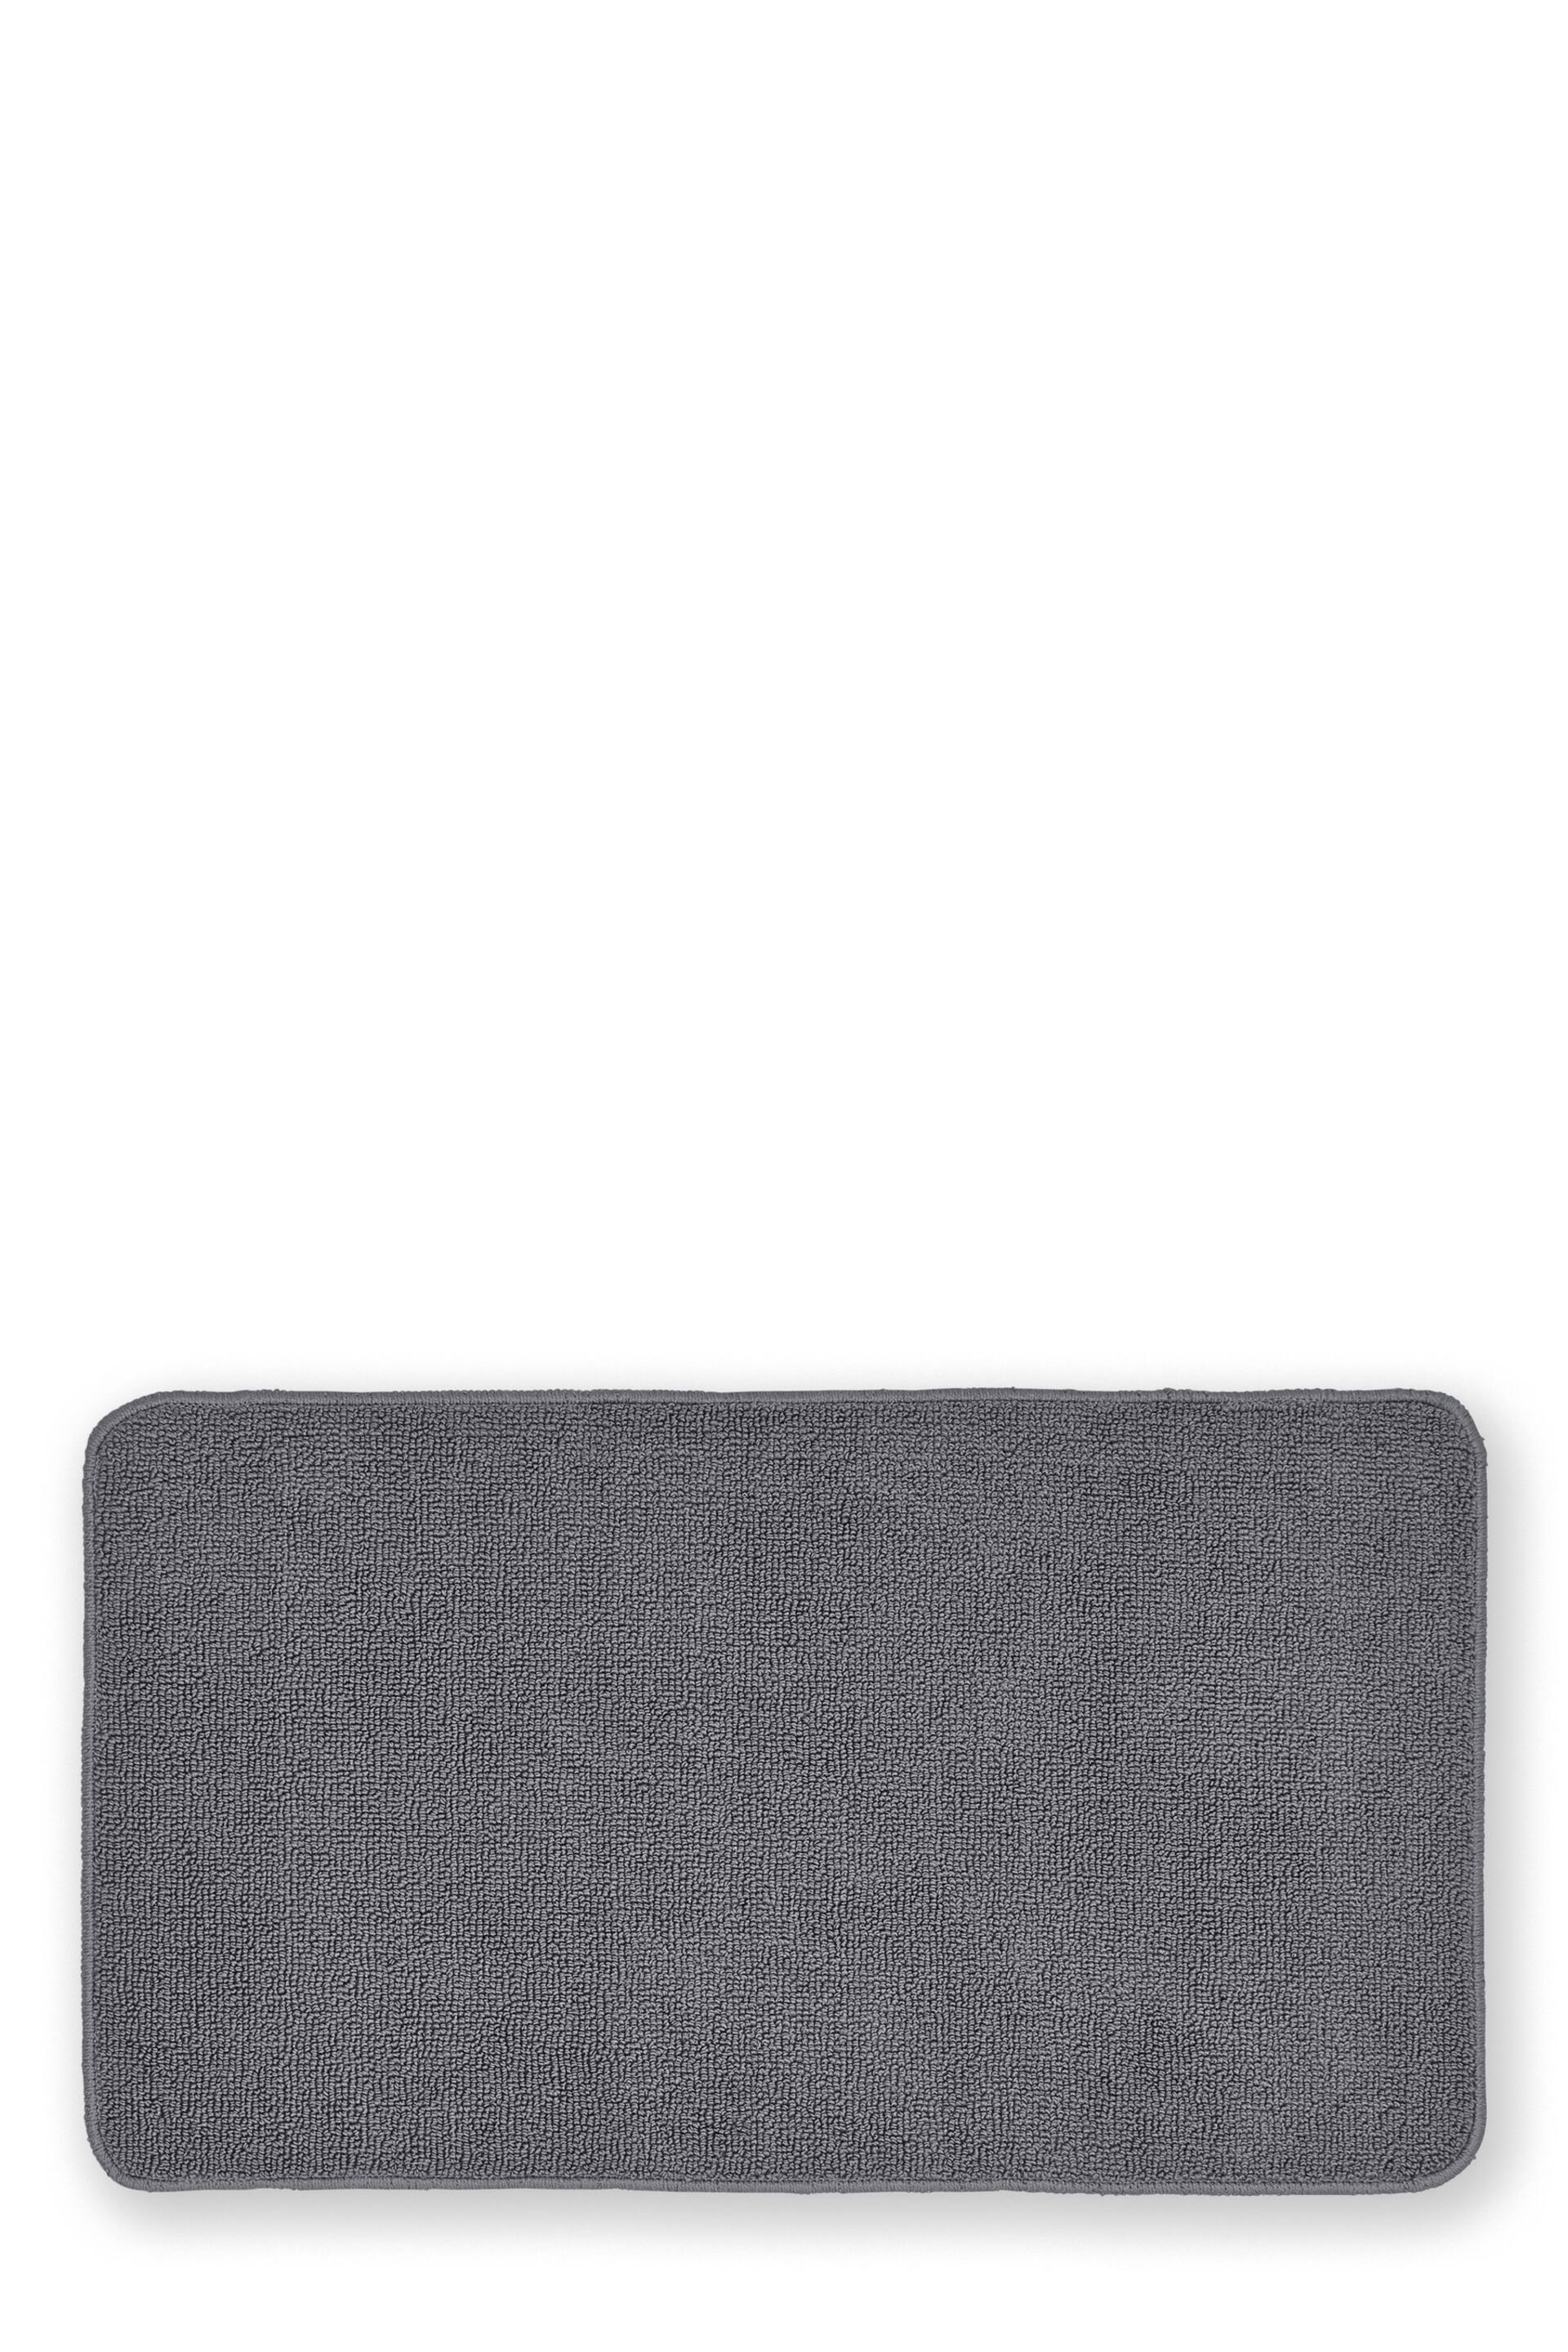 2 Pack Grey Washable Doormats - Image 2 of 4